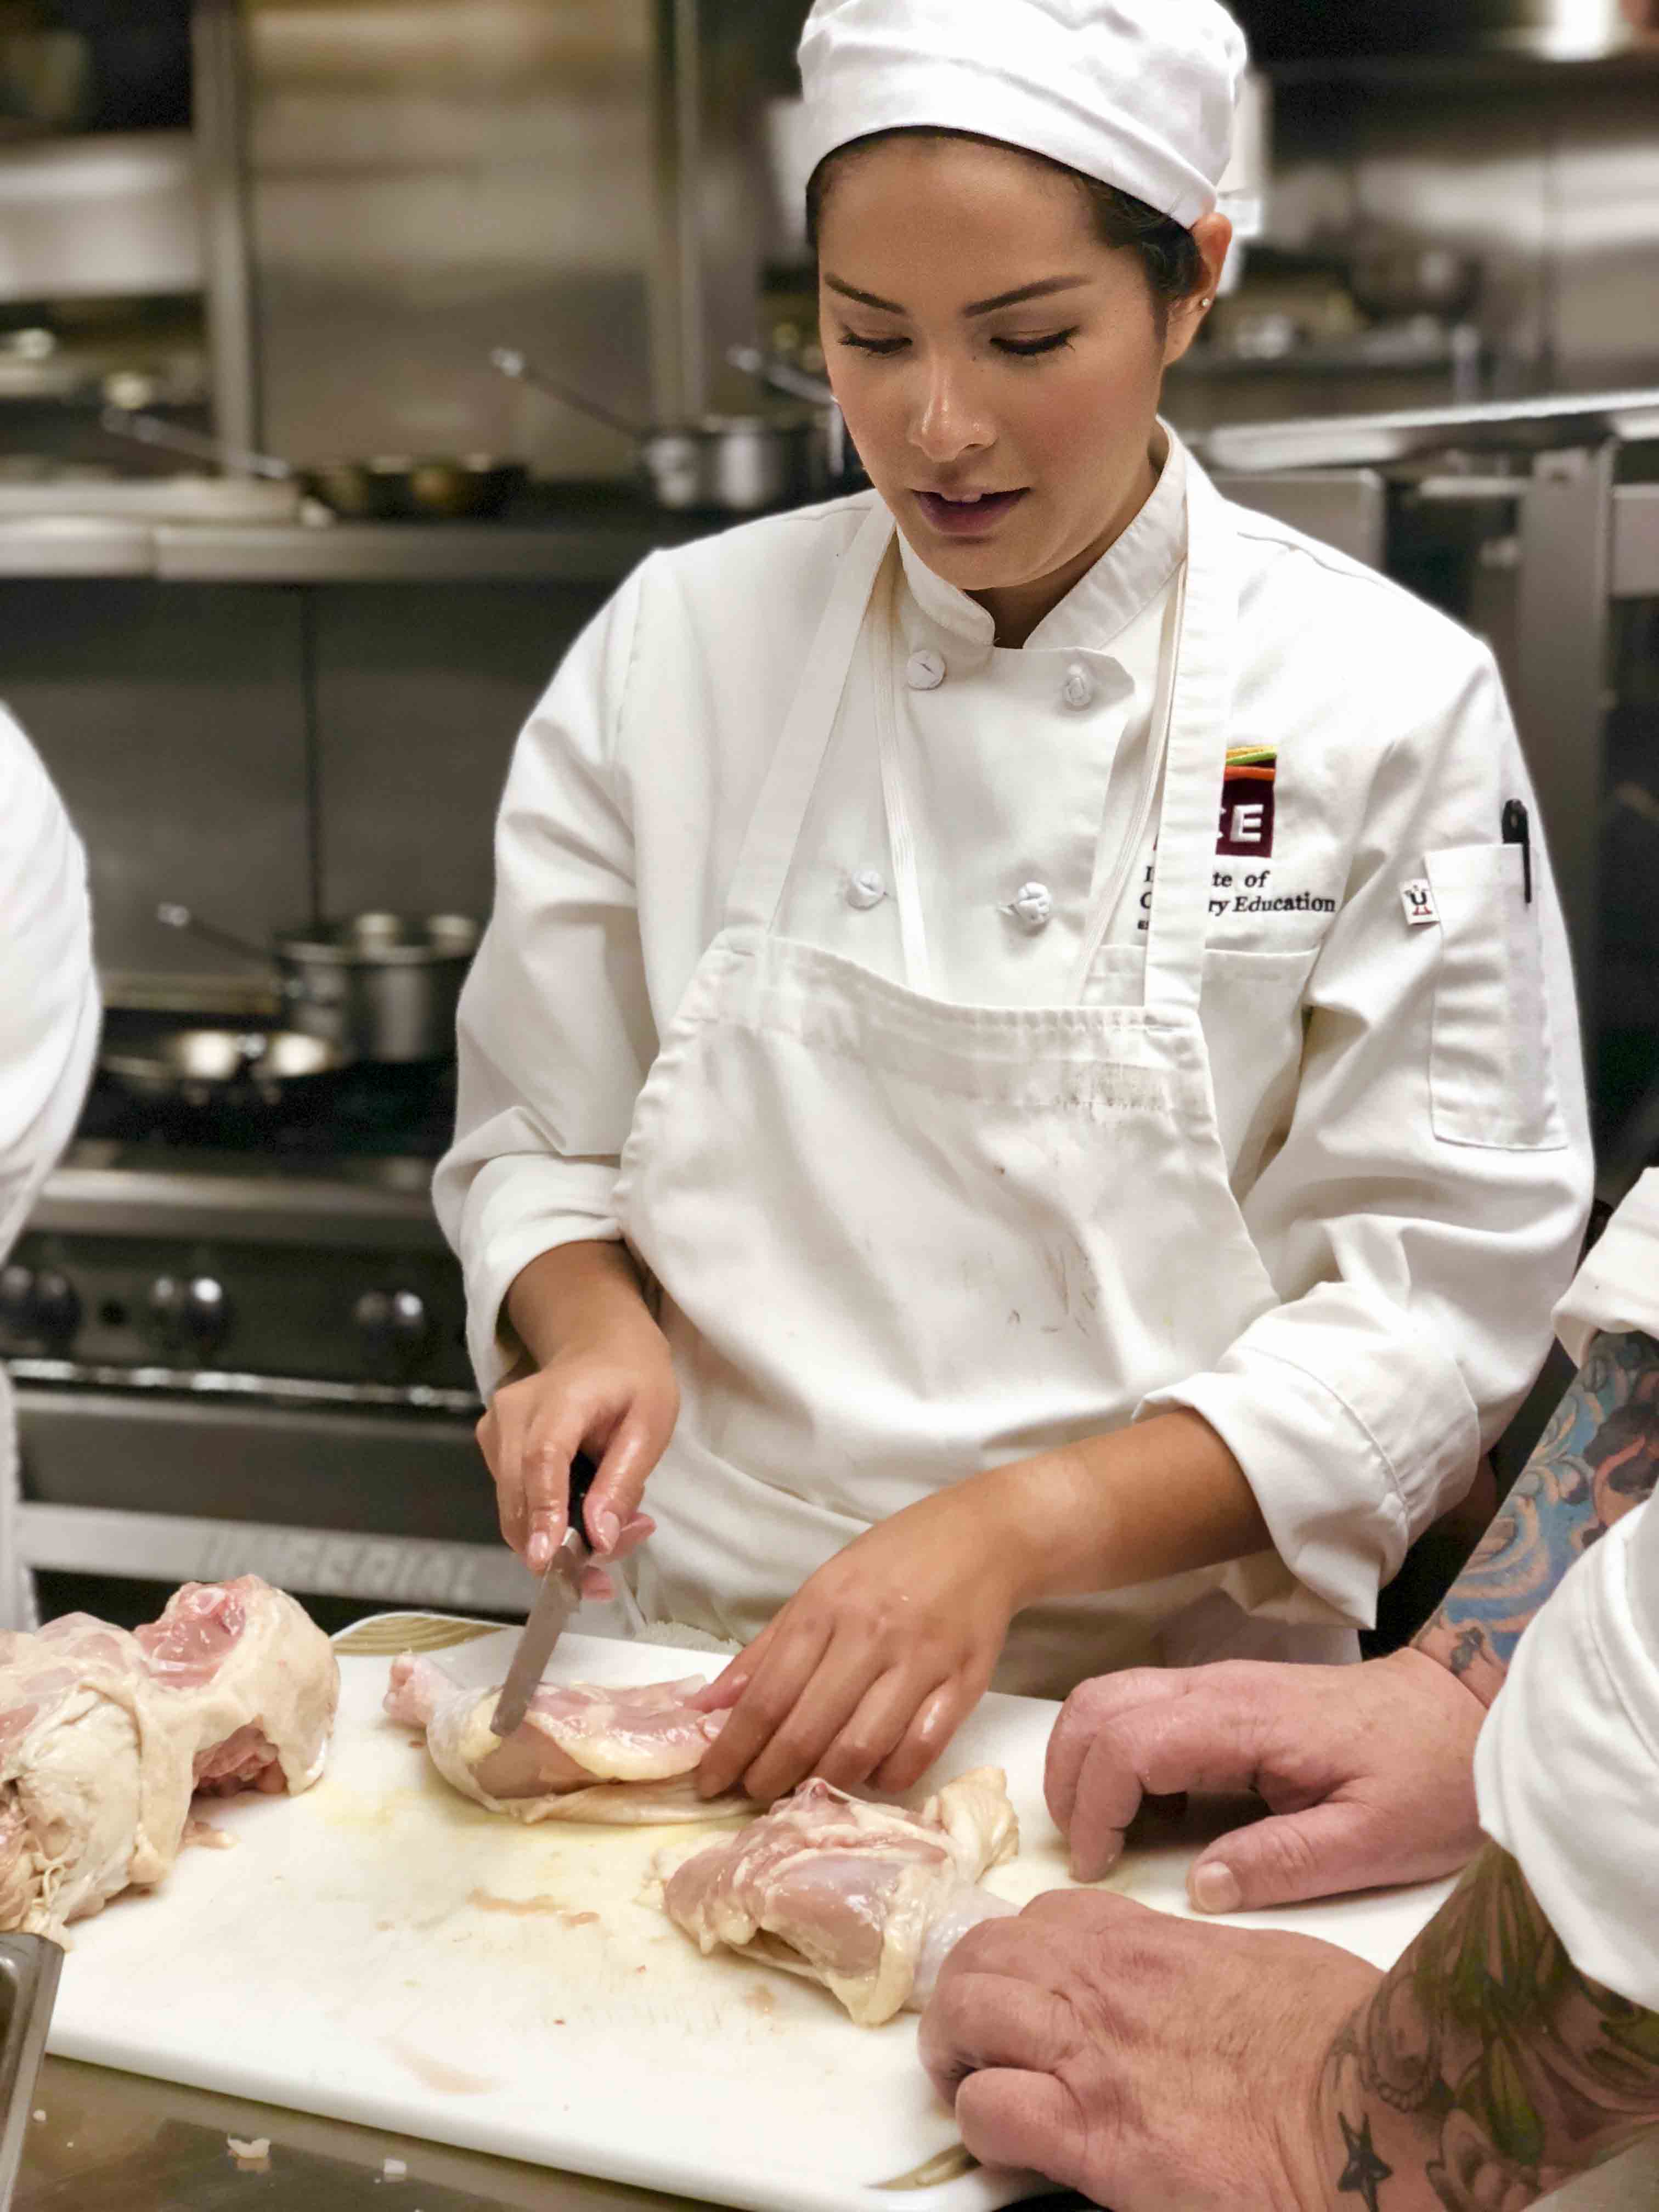 Maki Yazawa prepares poultry in an ICE Culinary Arts class.